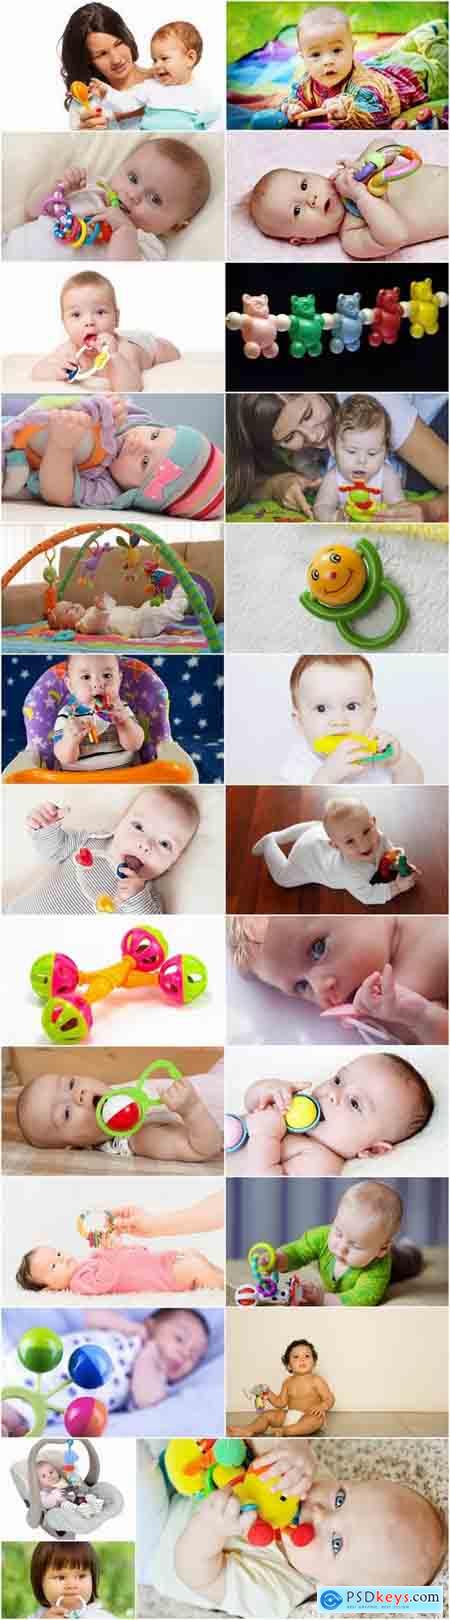 Children baby rattle with a children toy 25 HQ Jpeg